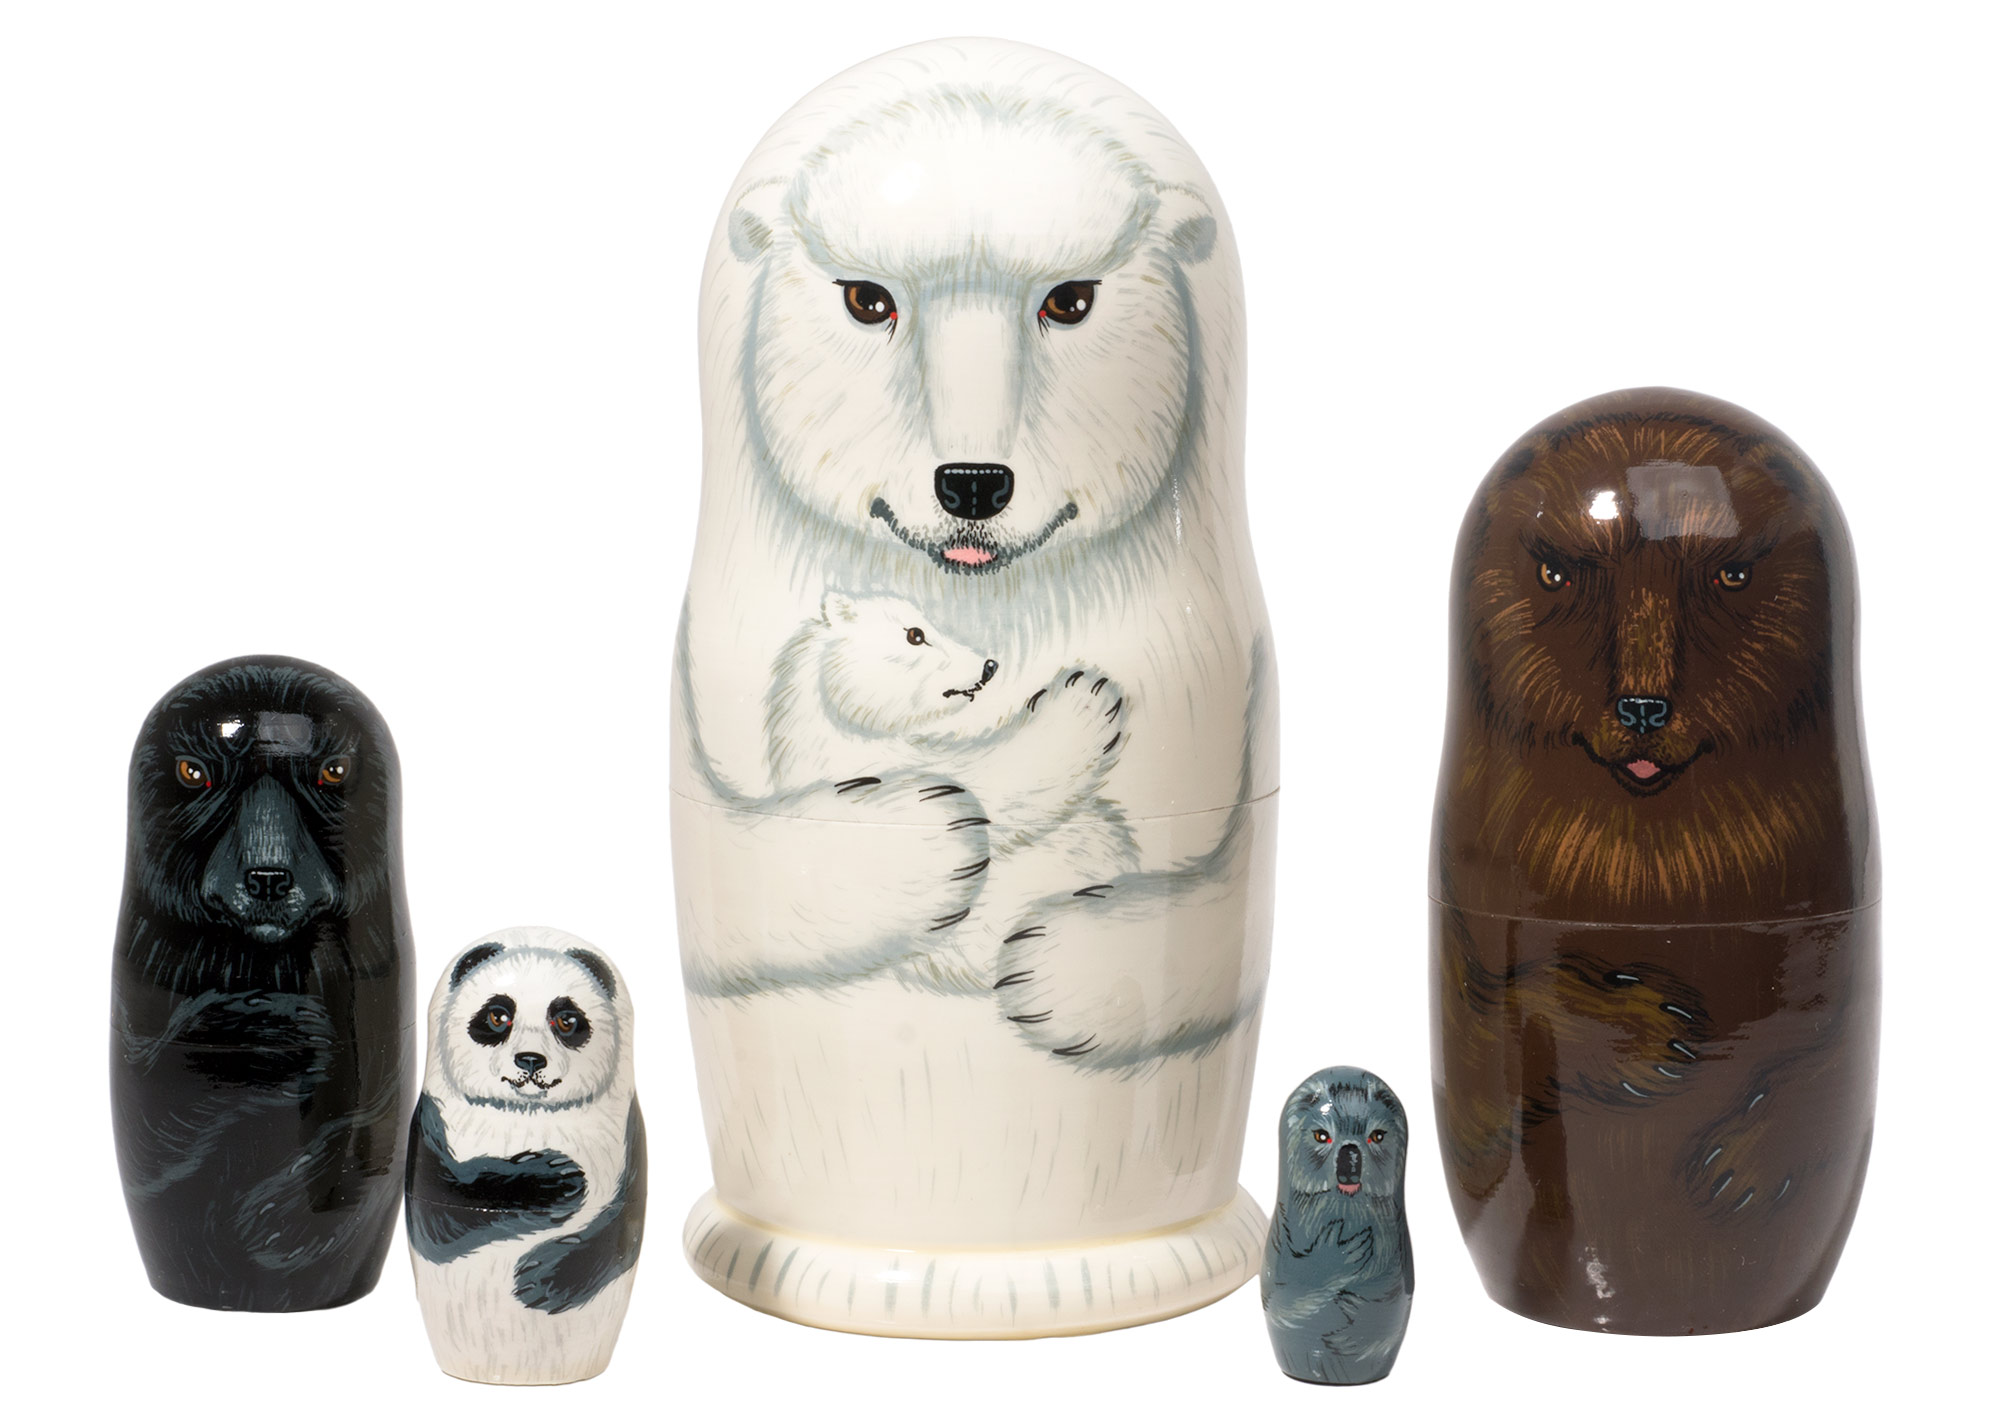 Buy Bears of the World Doll 5pc./6" at GoldenCockerel.com